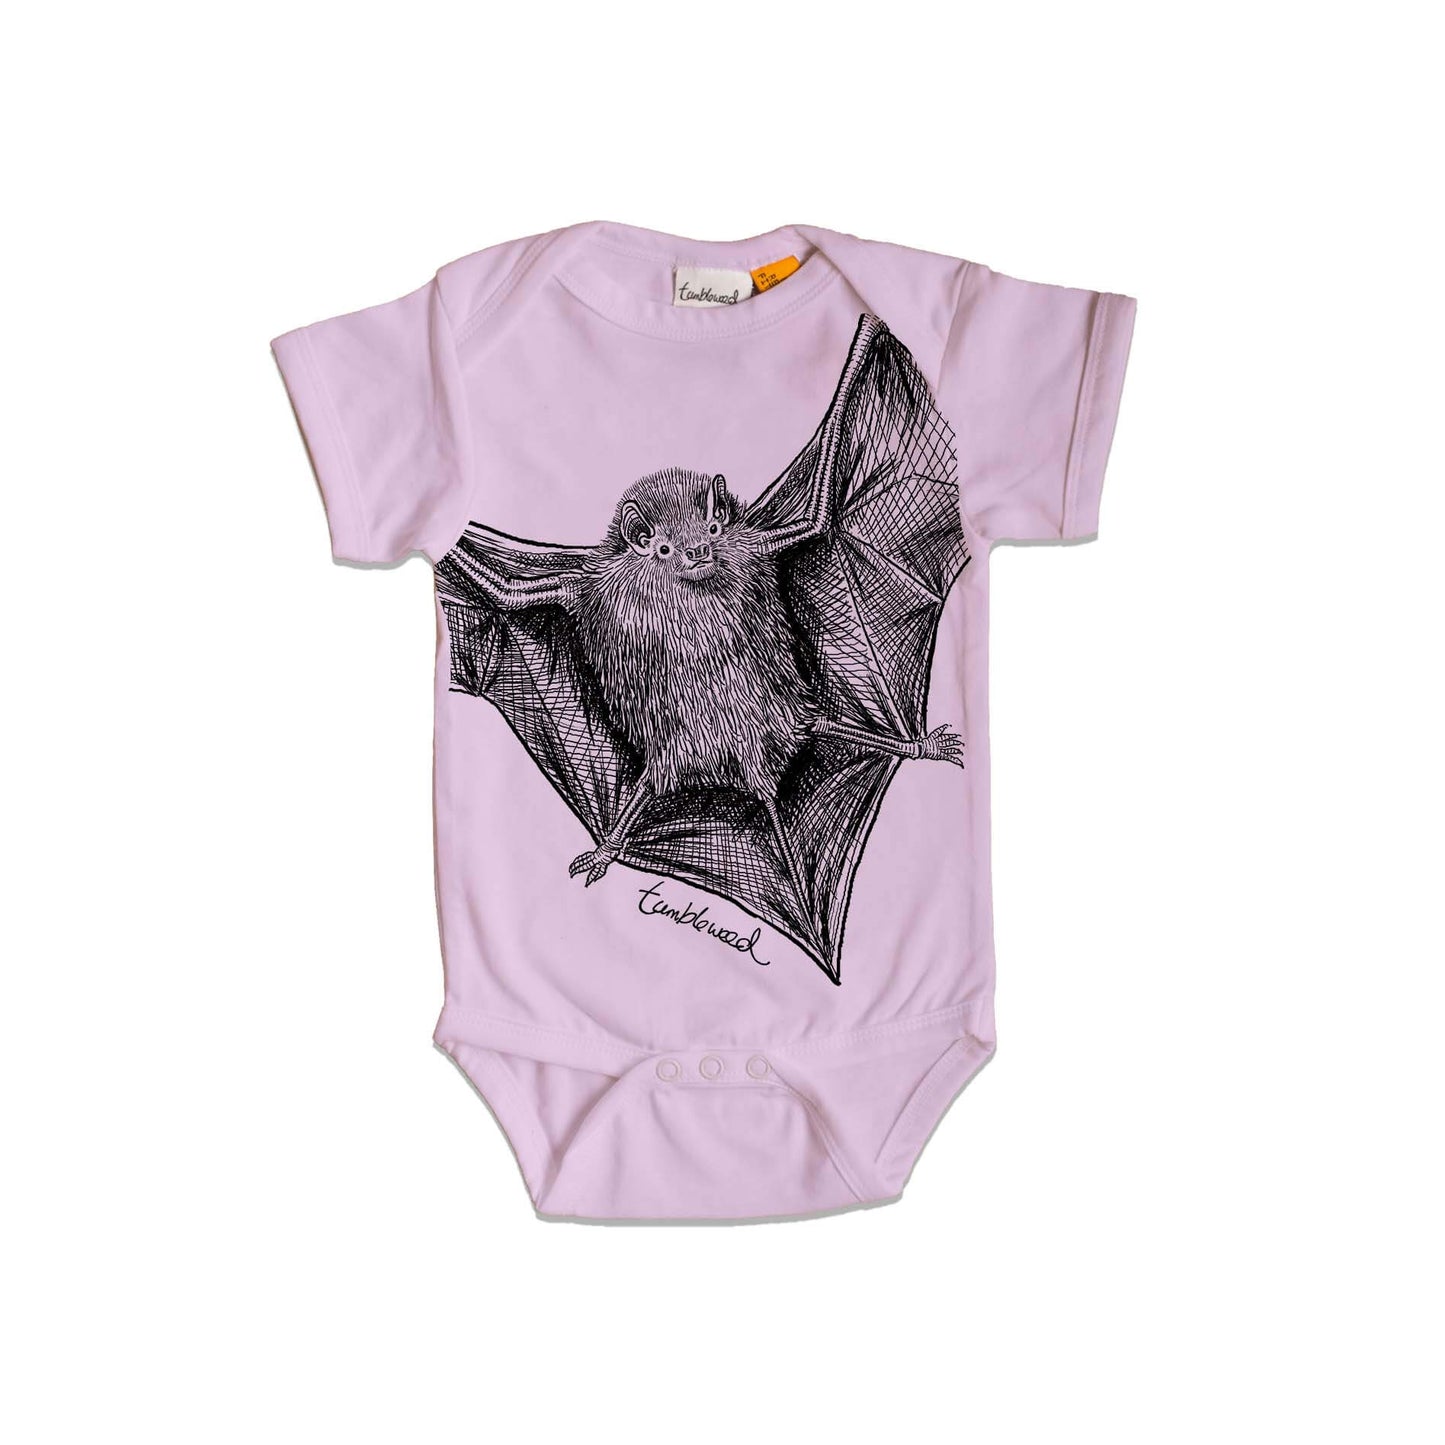 Short sleeved, purple, organic cotton, baby onesie featuring a screen printed bat/pekapeka design.
 design.